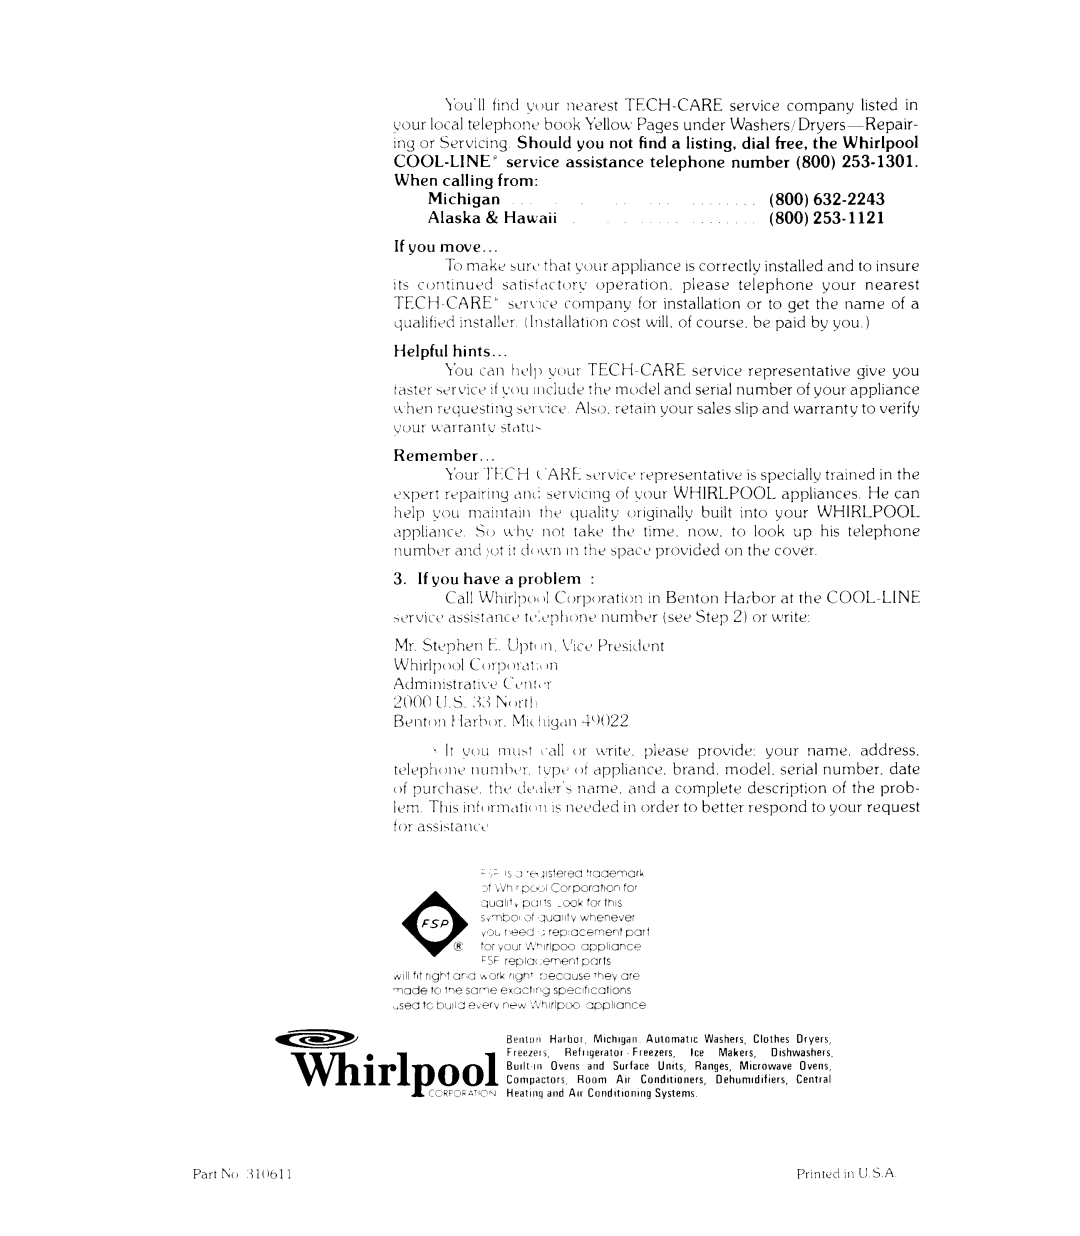 Whirlpool RJE-953PP manual 632-2243 